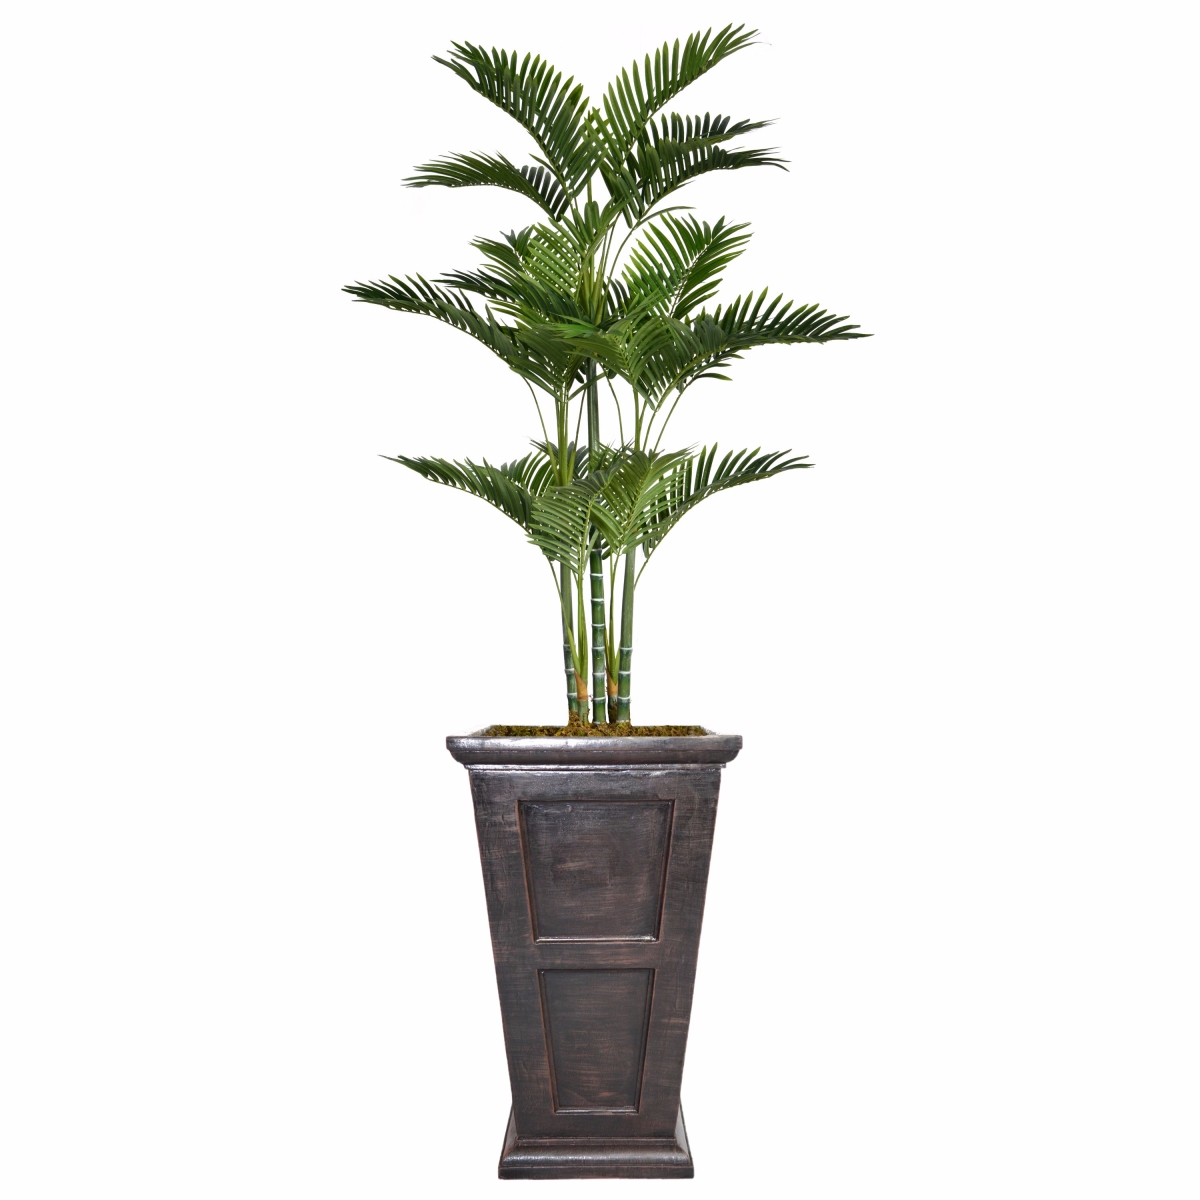 Vhx132201 78.8 In. Tall Palm Tree With Burlap Kit & Fiberstone Planter